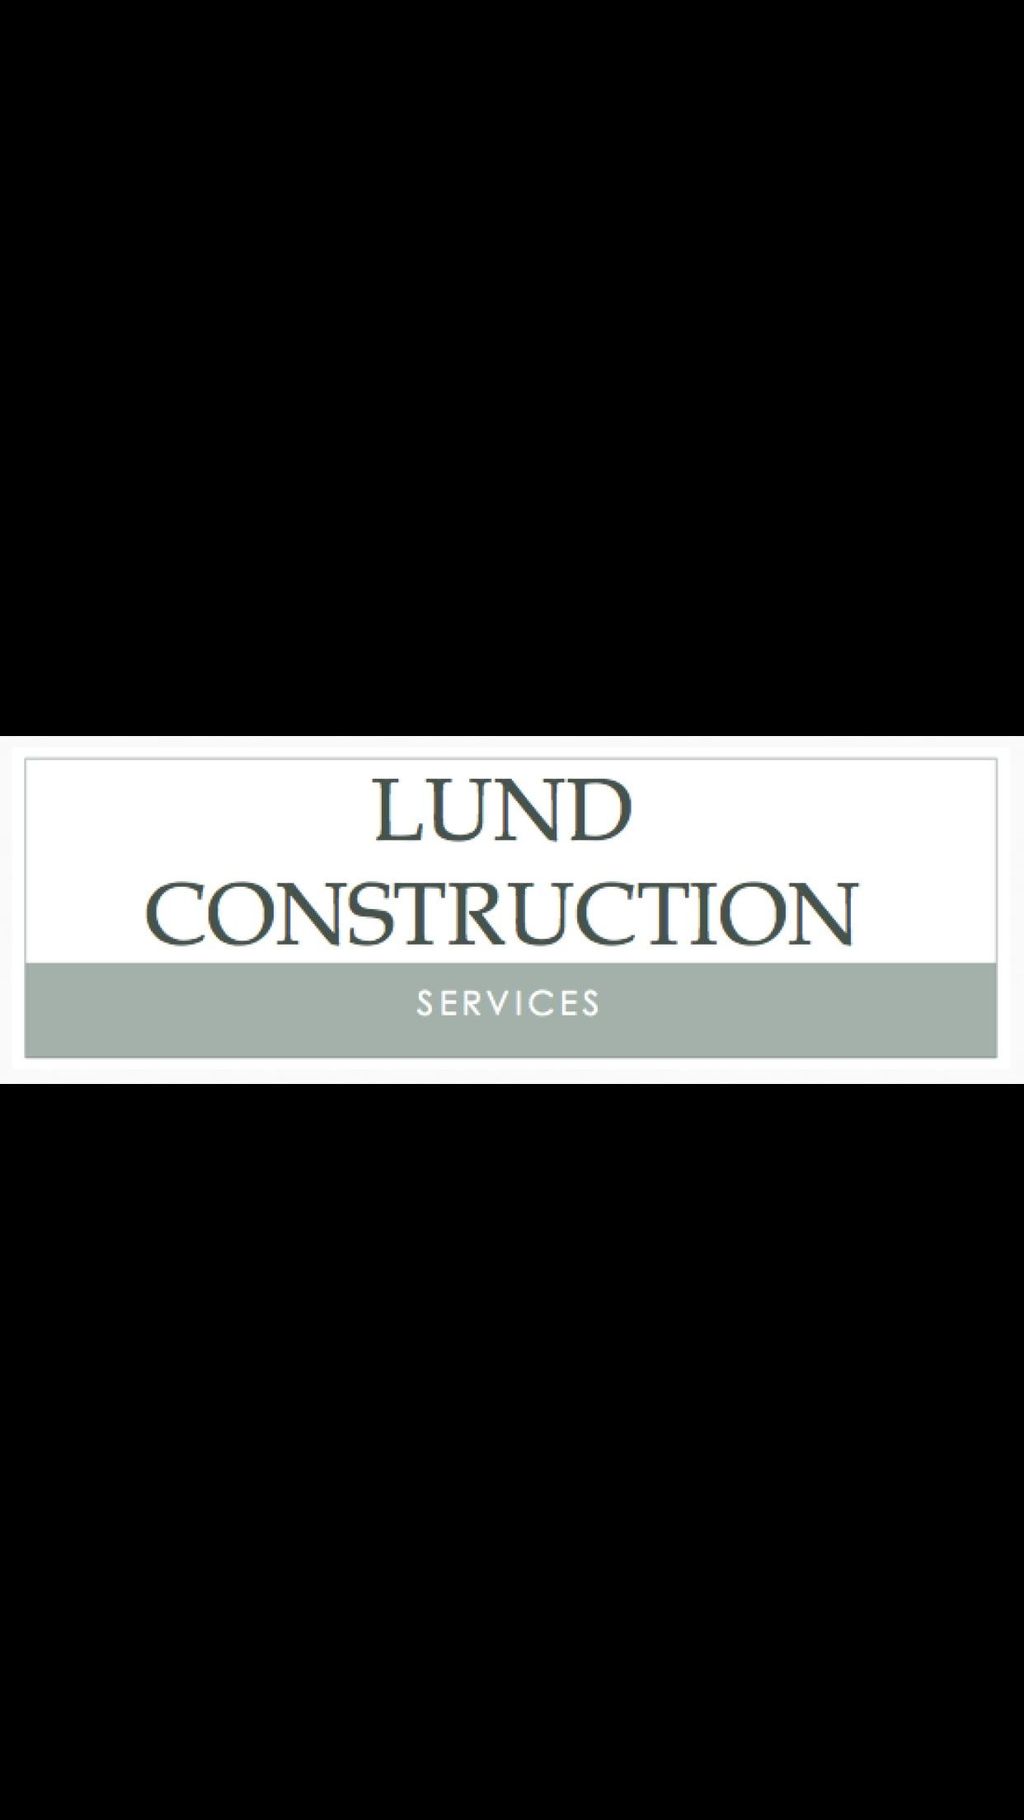 Lund Construction Services